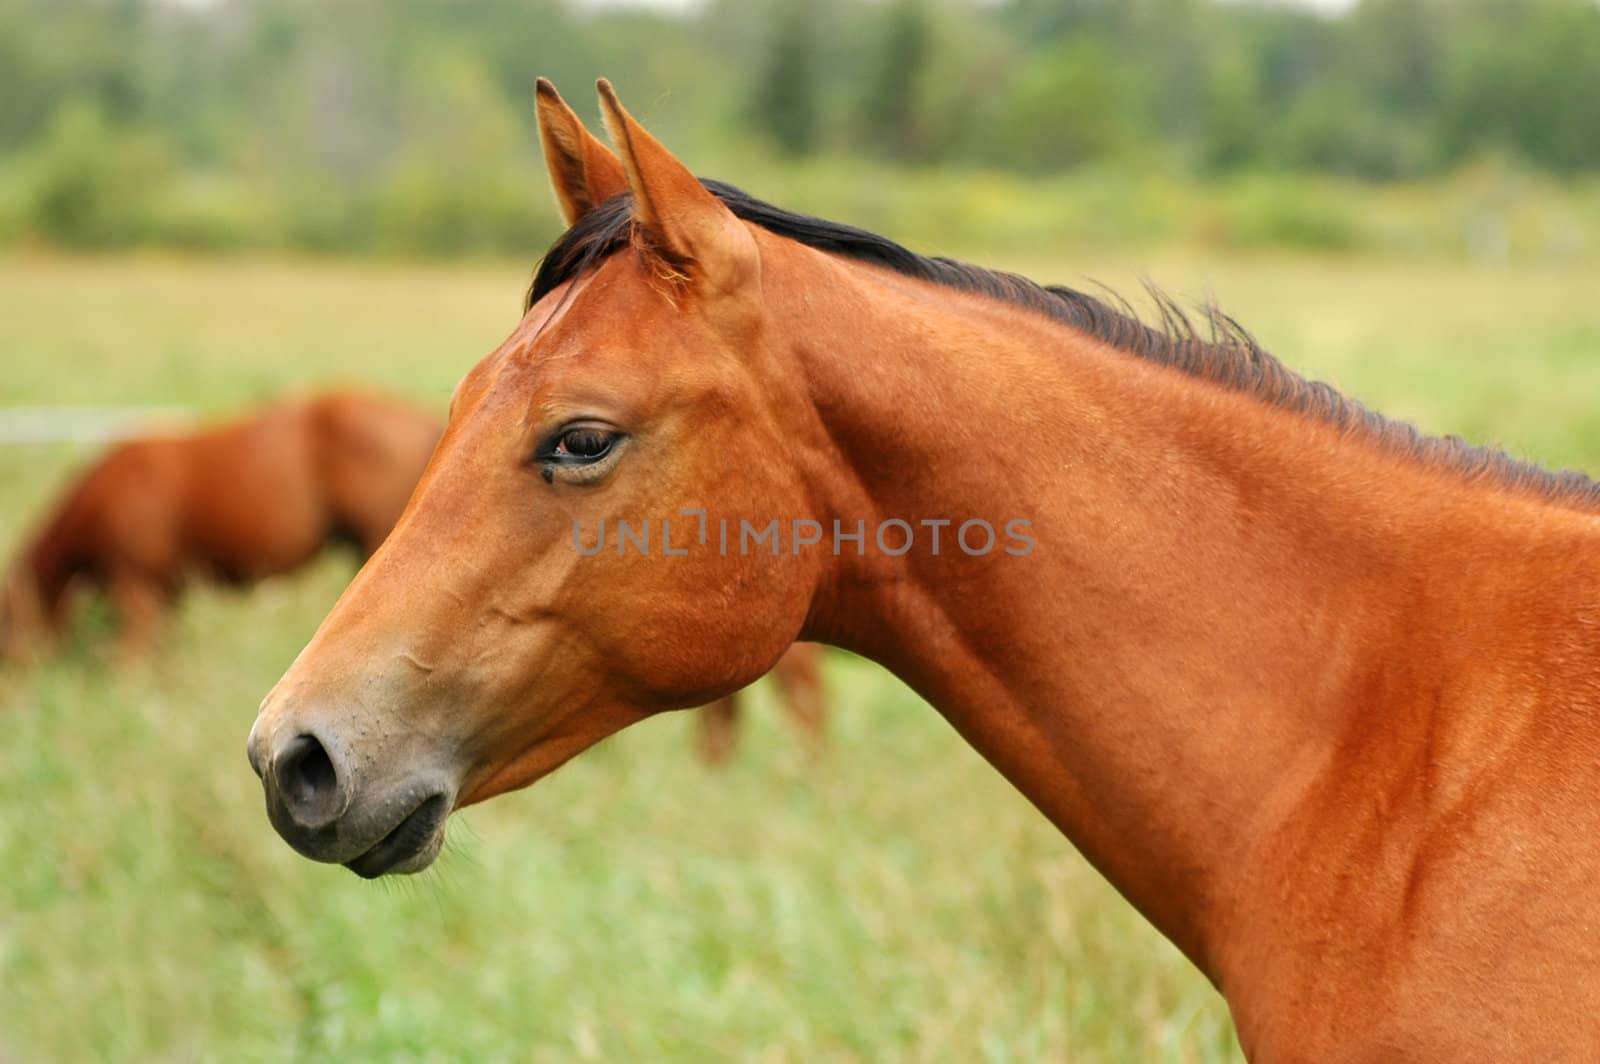 Beautiful portrait of a horse in a field
